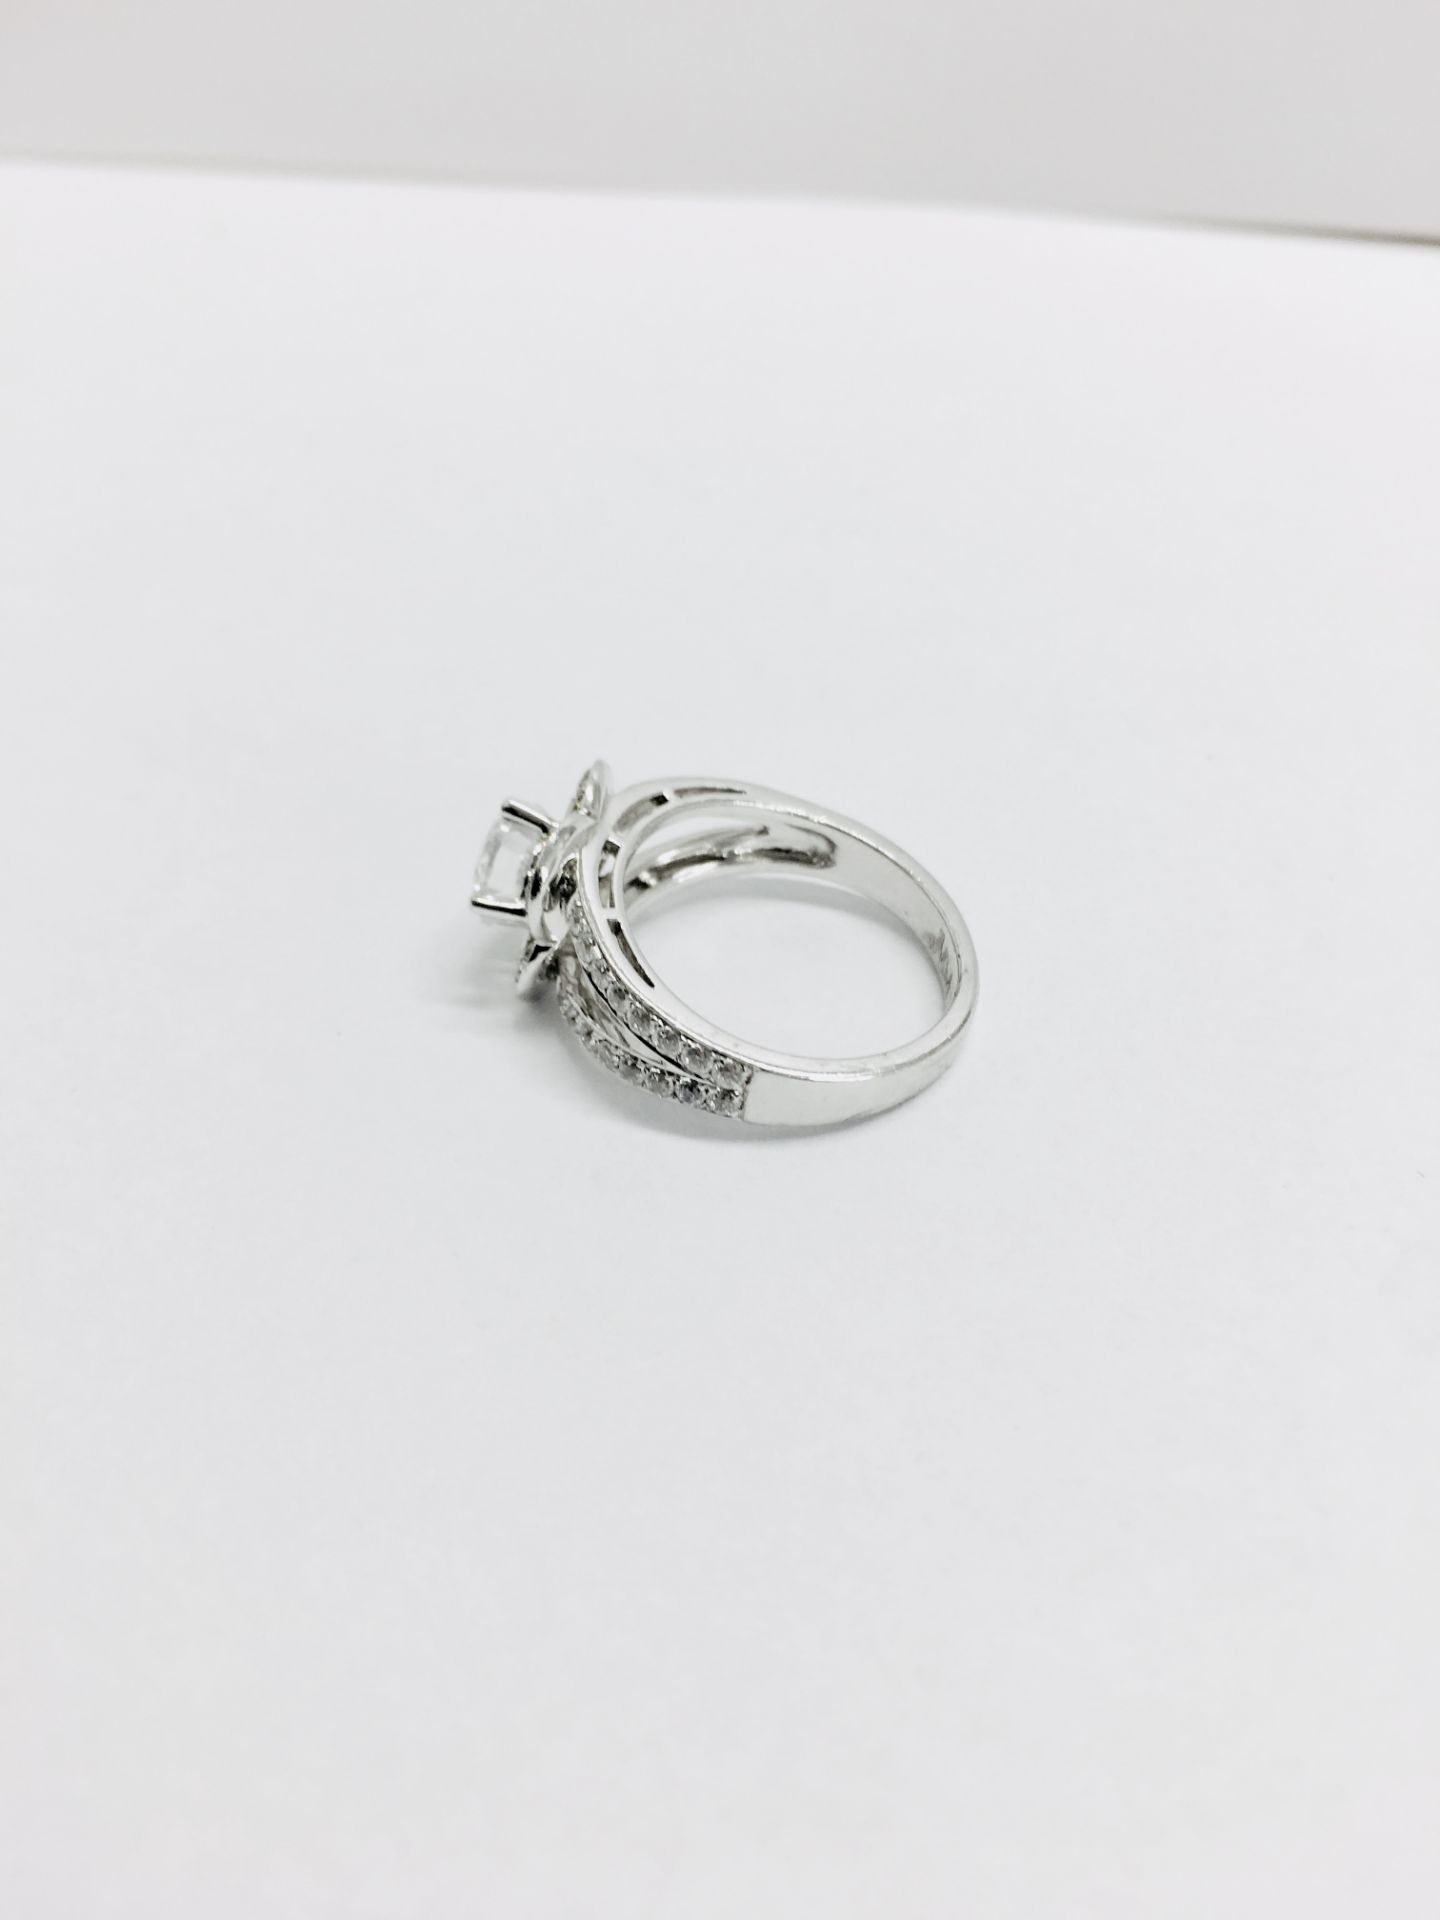 Platinum Fancy design solitaire ring,0.50ct D colour vs clarity , natural brilliant cut diamond,5. - Image 2 of 6